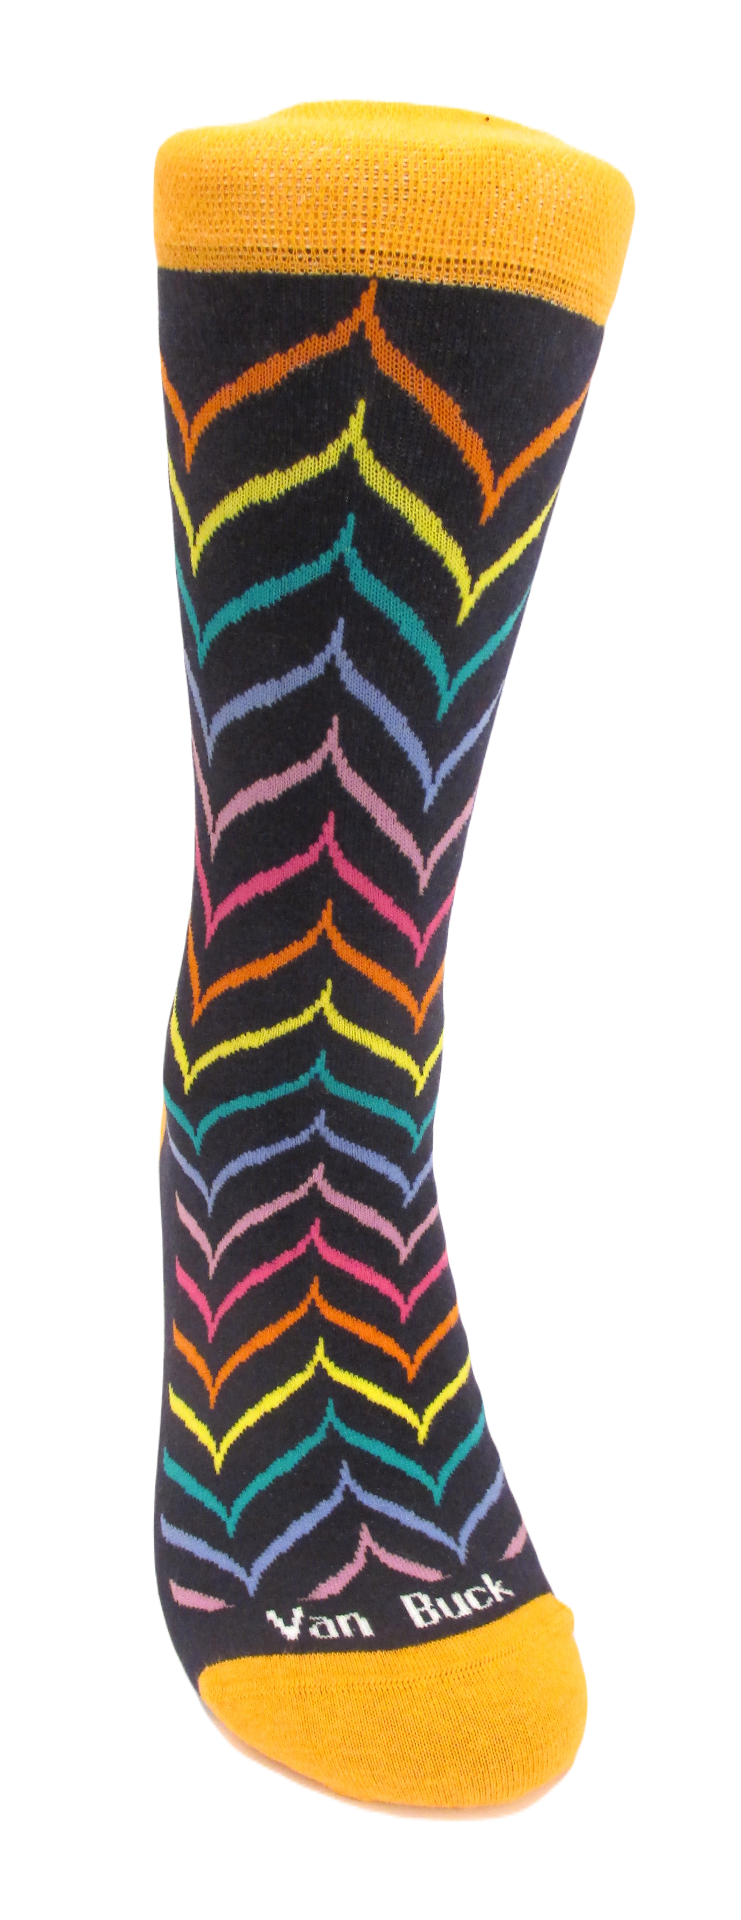 van buck limited edition herringbone stripe socks